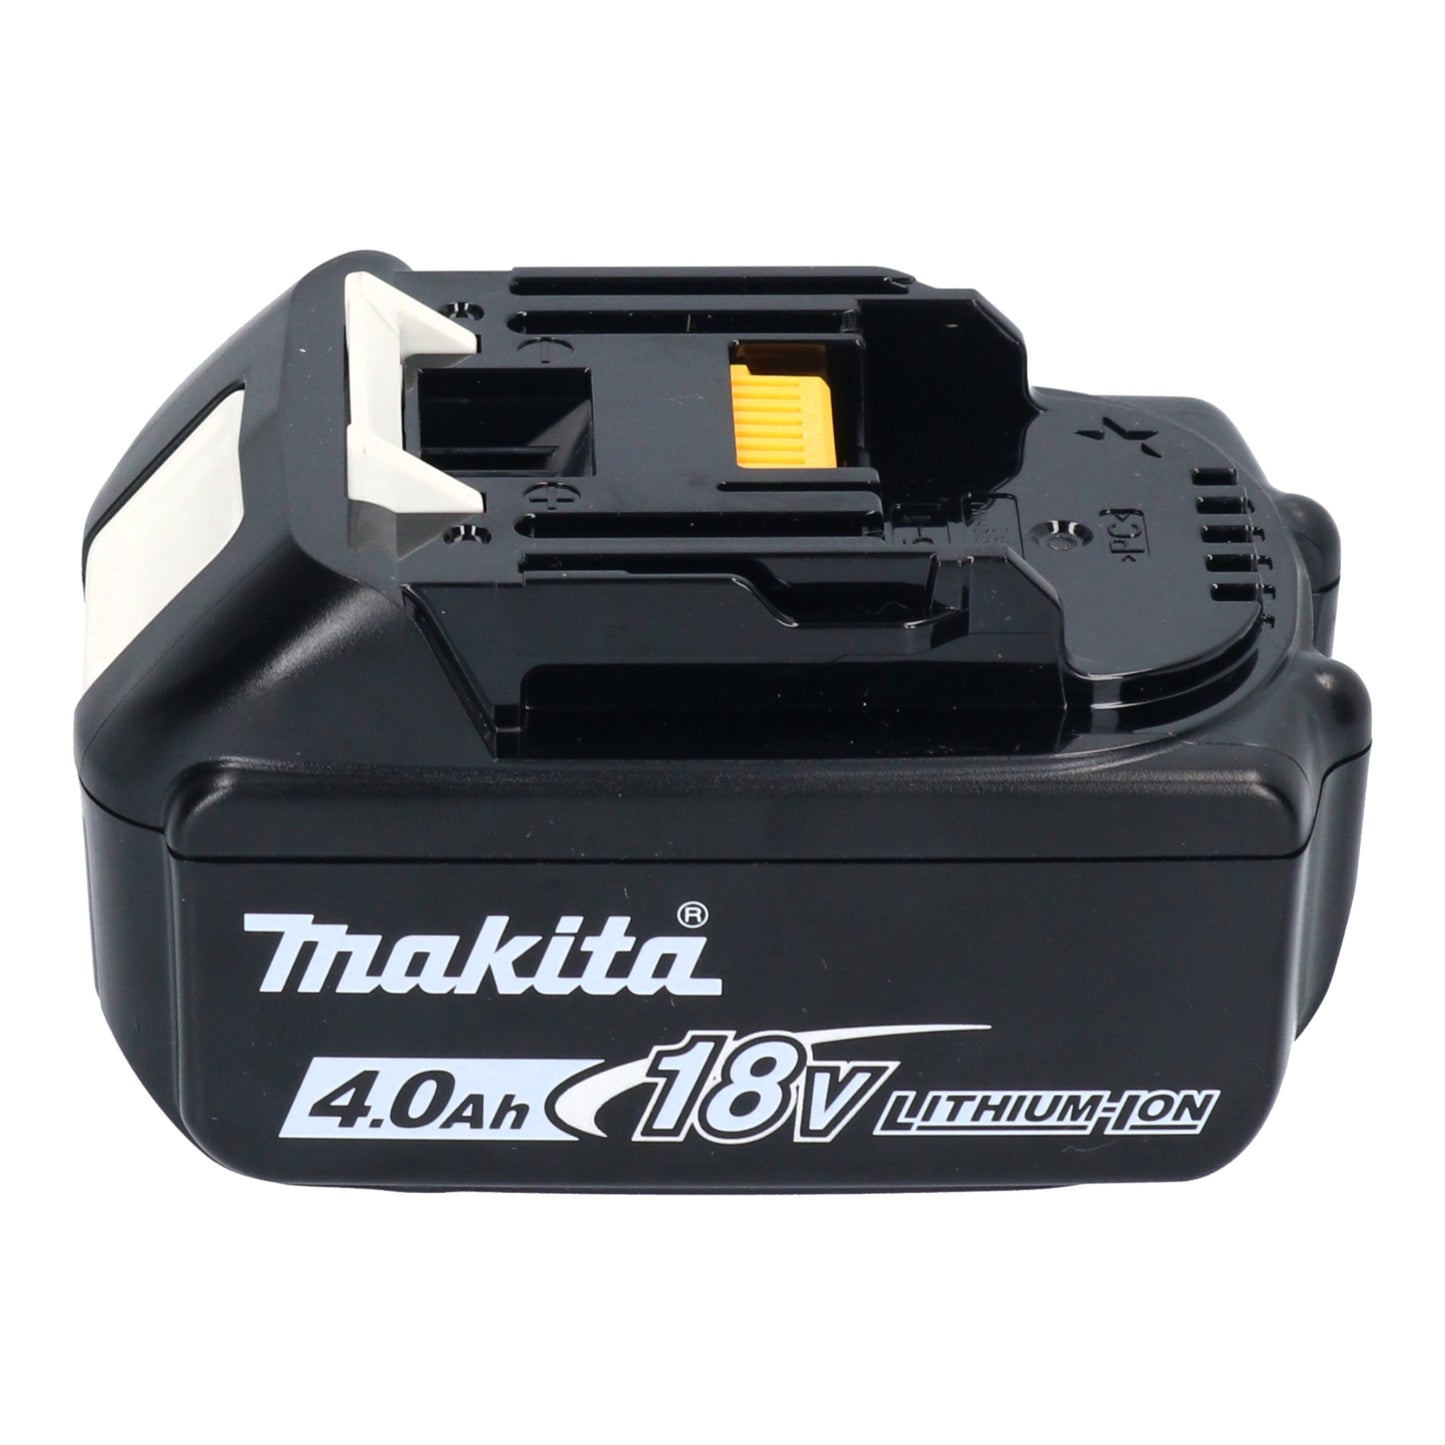 Makita DHP 482 M1B Akku Schlagbohrschrauber 18 V 62 Nm Schwarz + 1x Akku 4,0 Ah - ohne Ladegerät